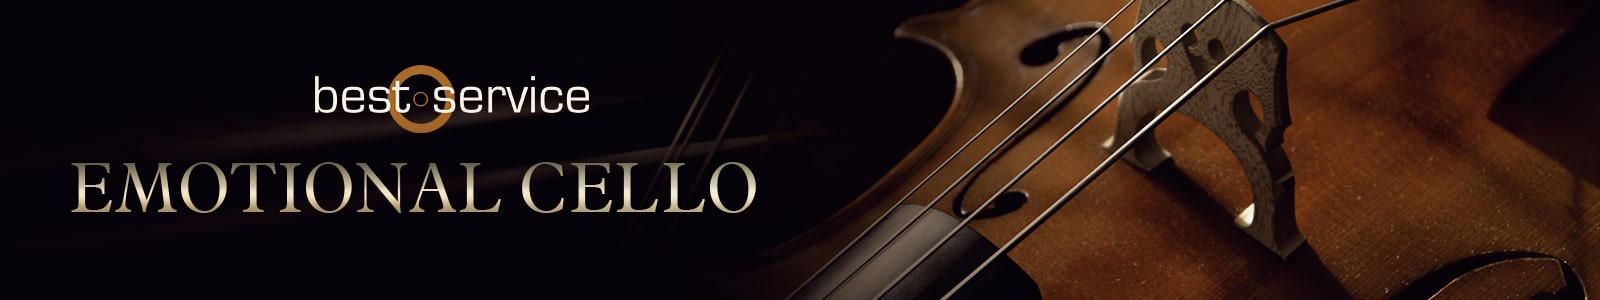 Emotional Cello by Best Service - Audio Plugin Deals